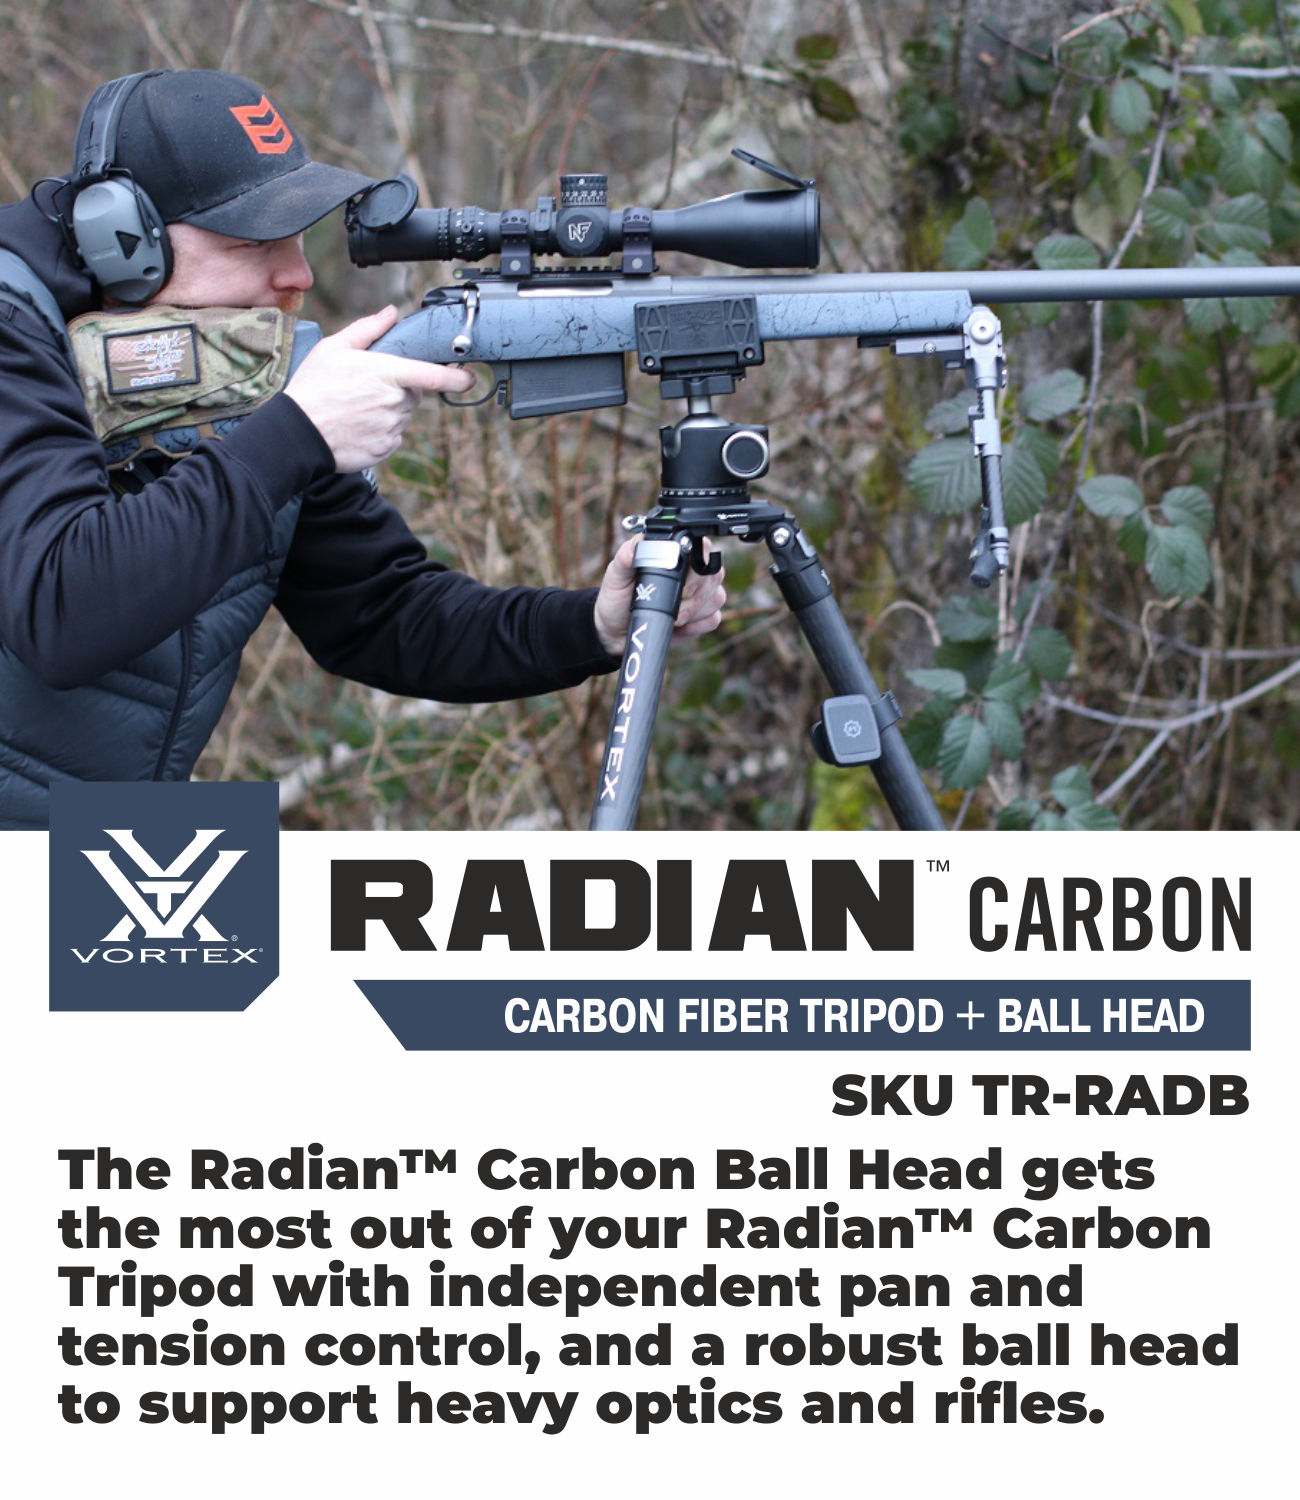 Radian Carbon Tripod + Ball Head